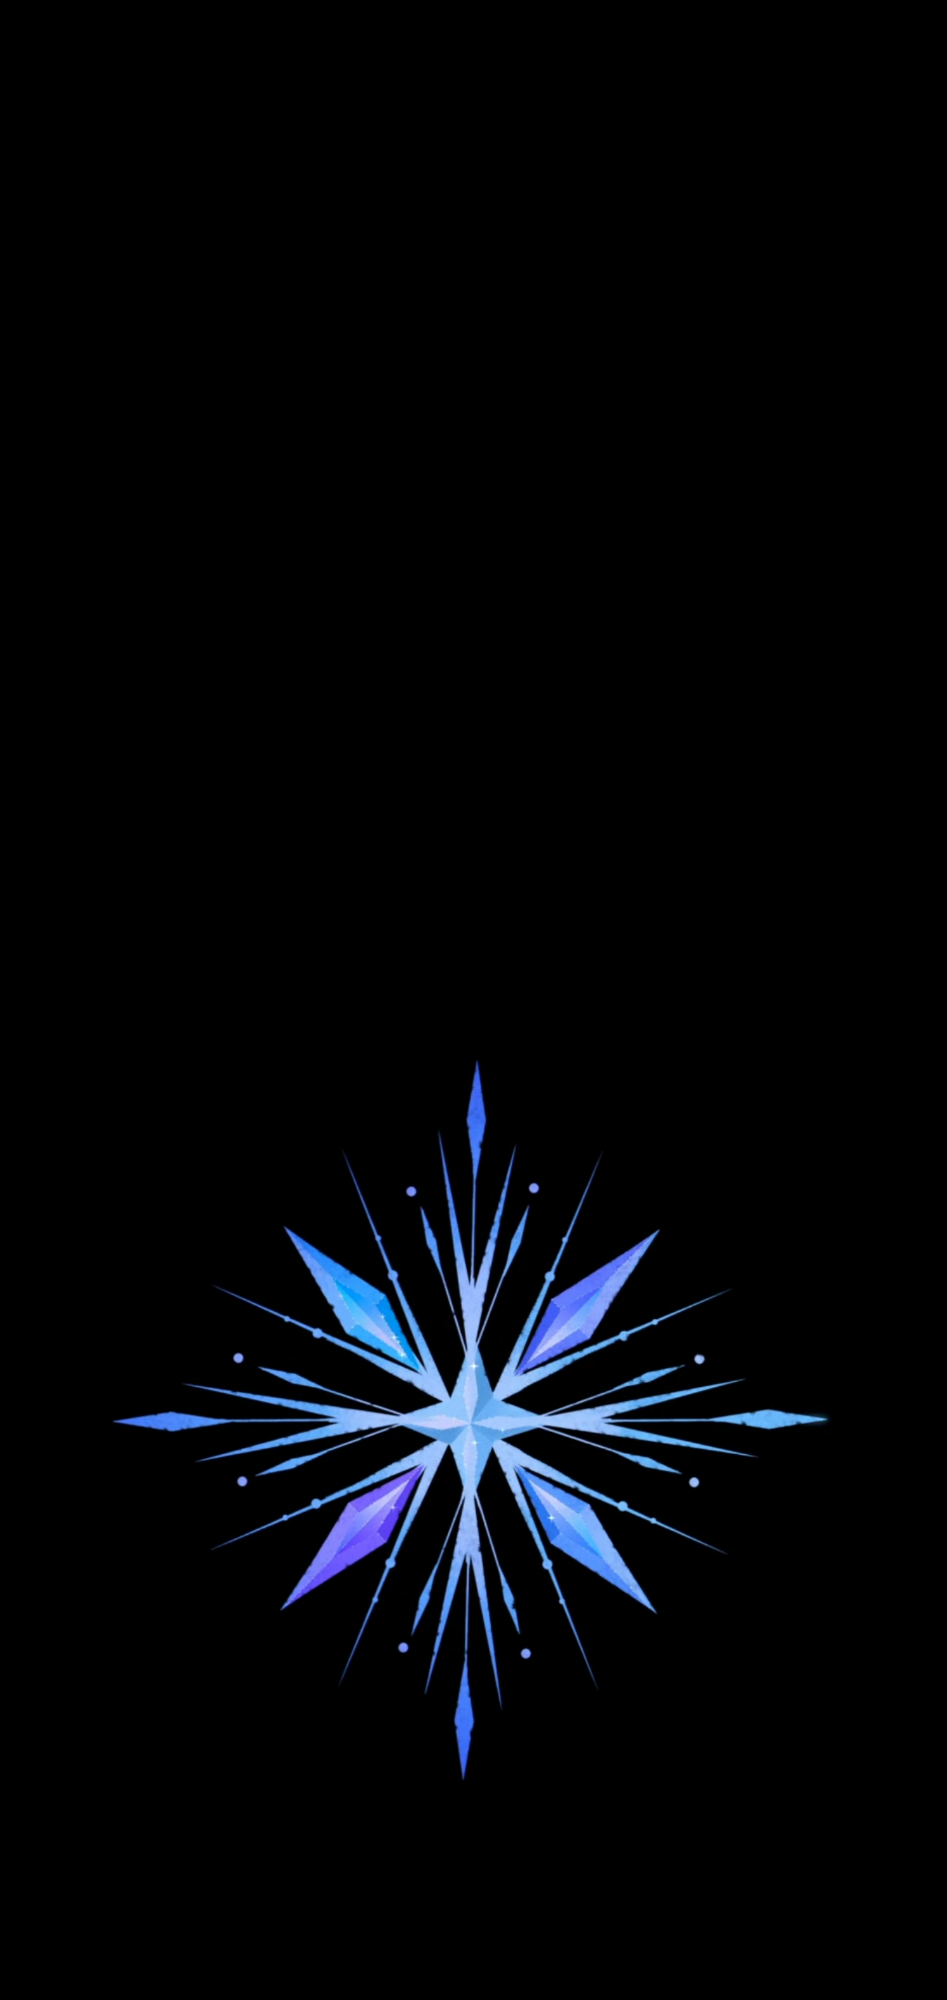 Background Snowflake Wallpaper